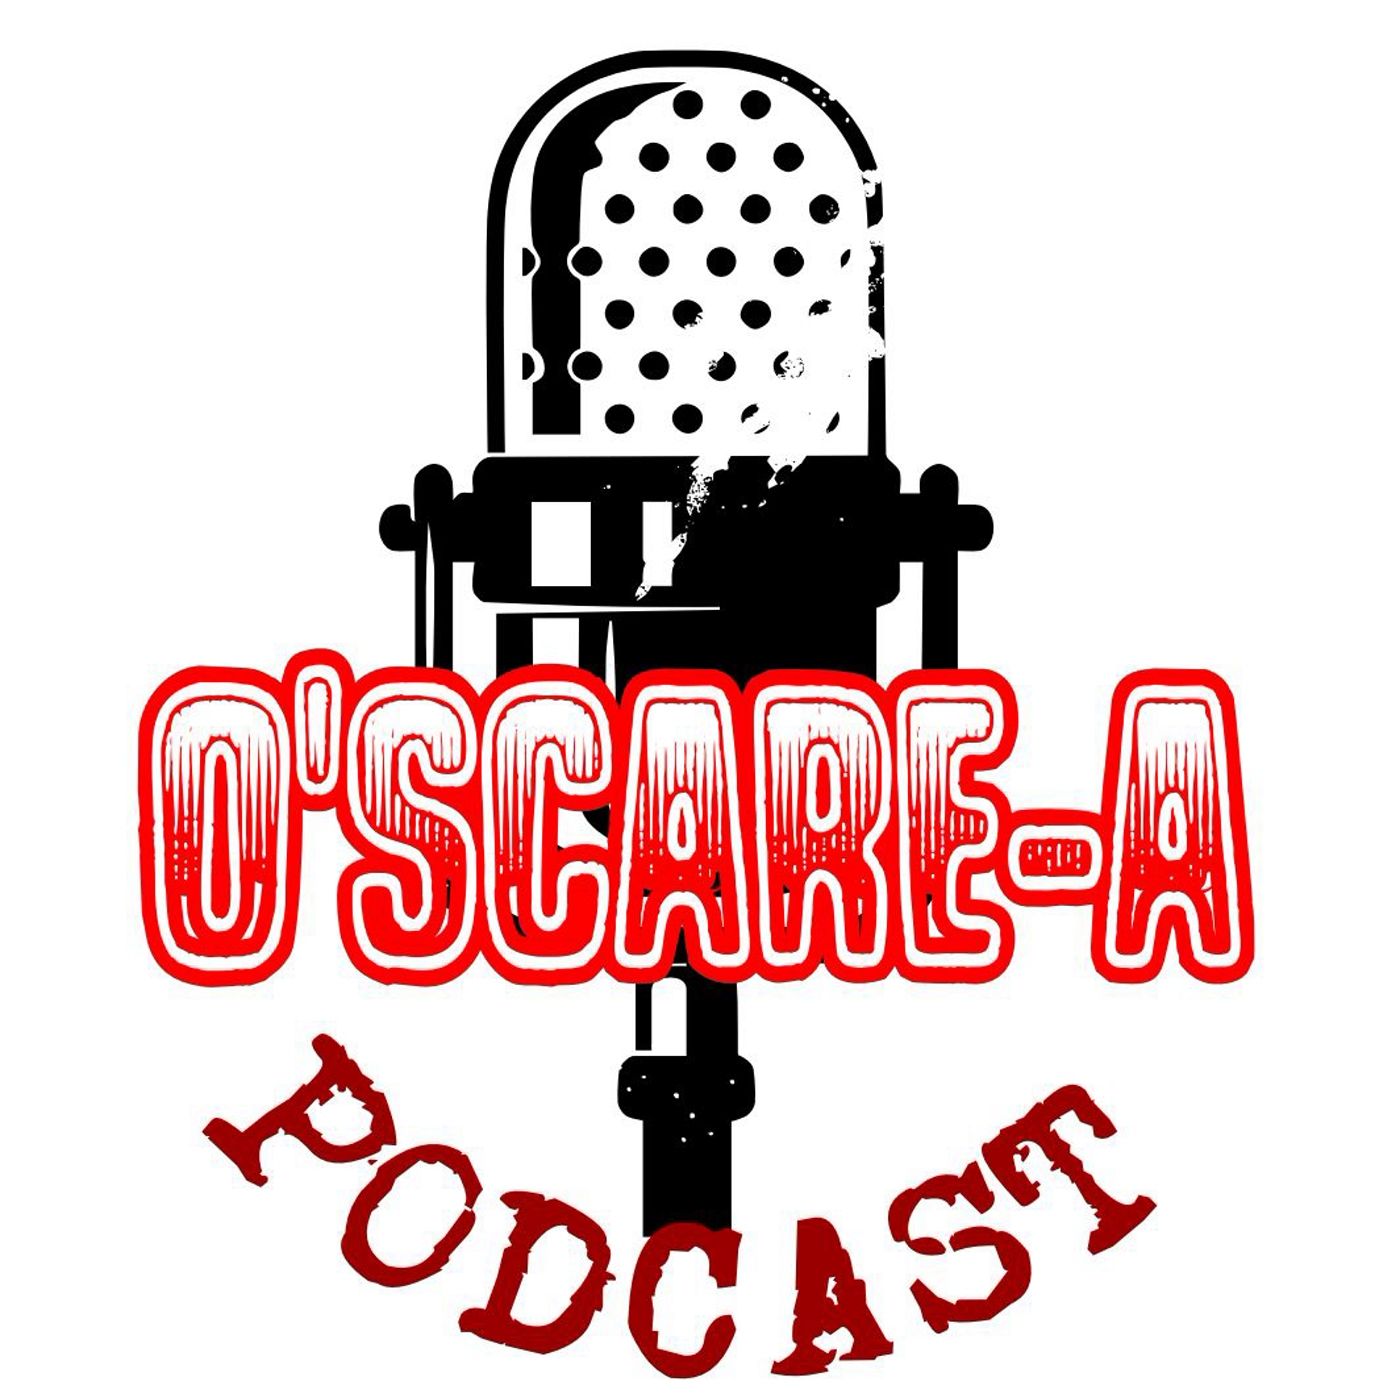 O’scare -A Podcast